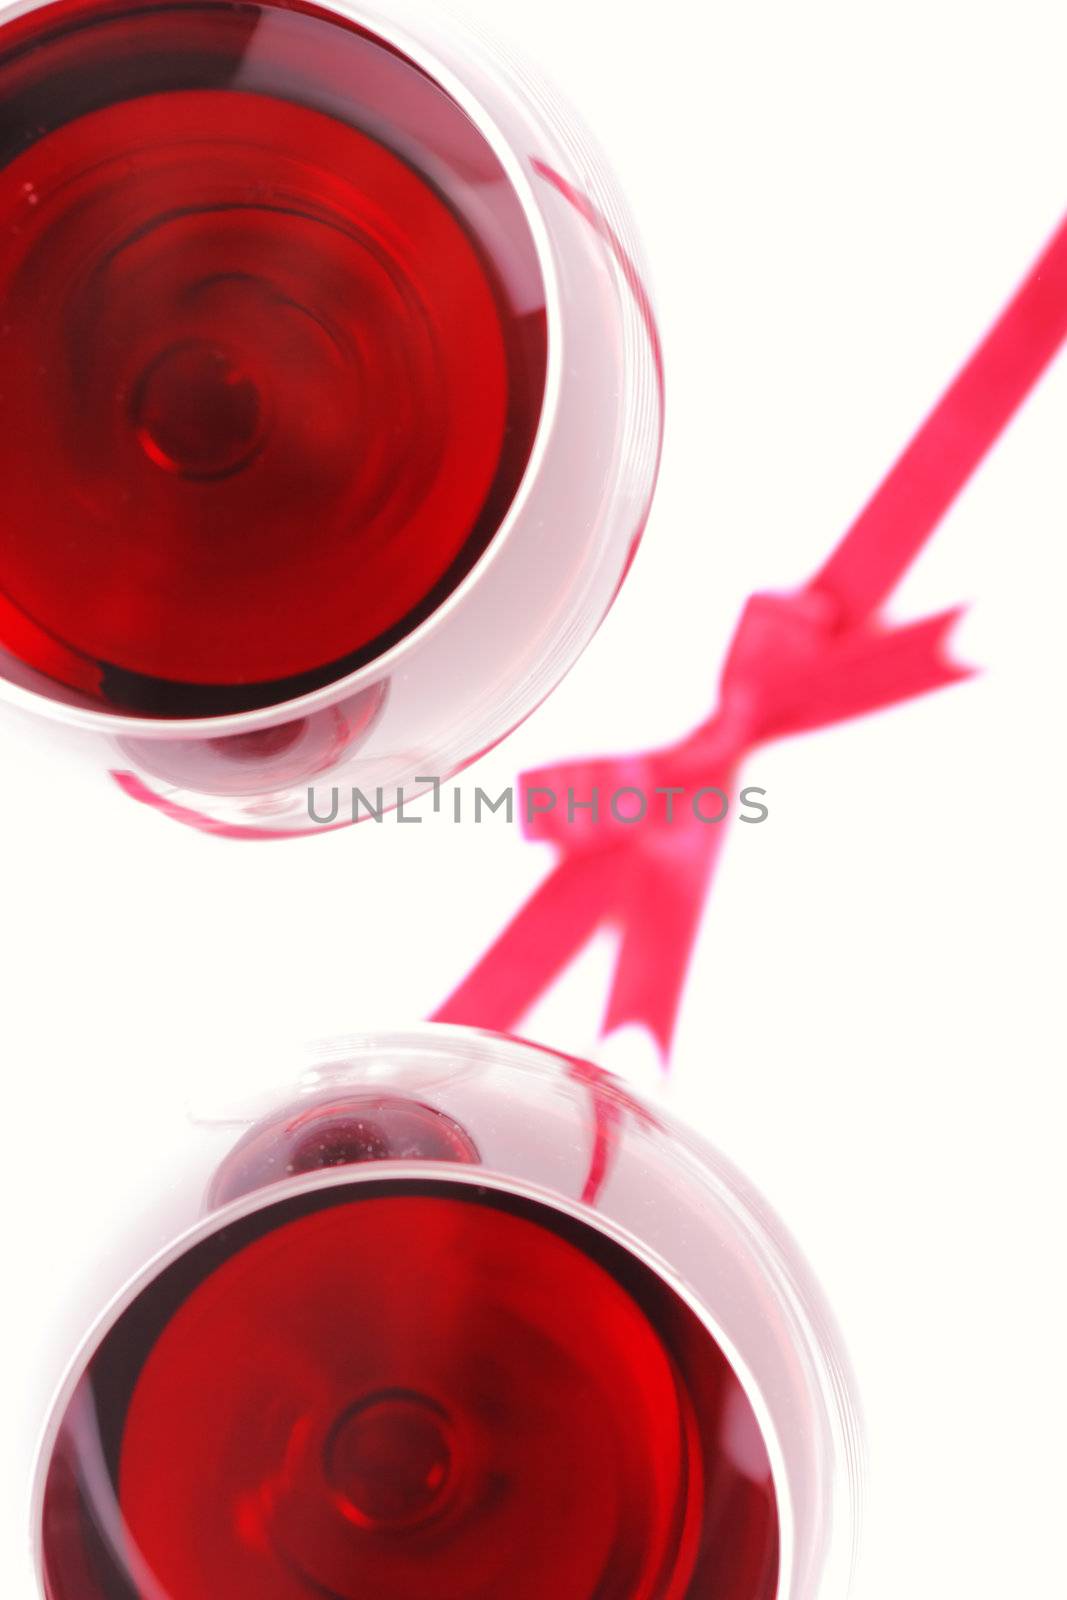 red wine glasses by kokimk